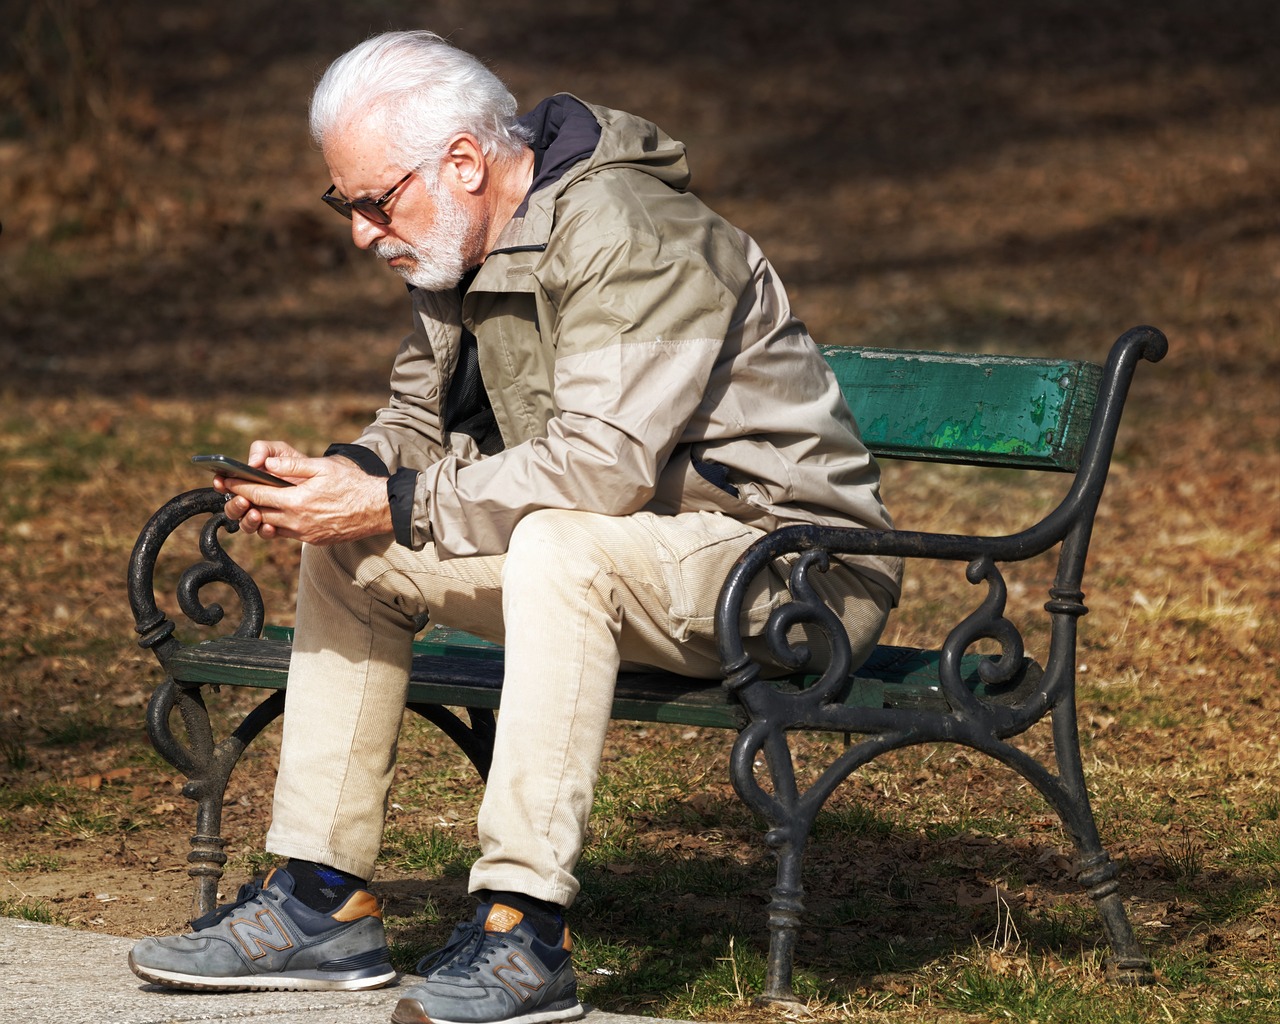 bilingual game app slows cognitive decline in seniors